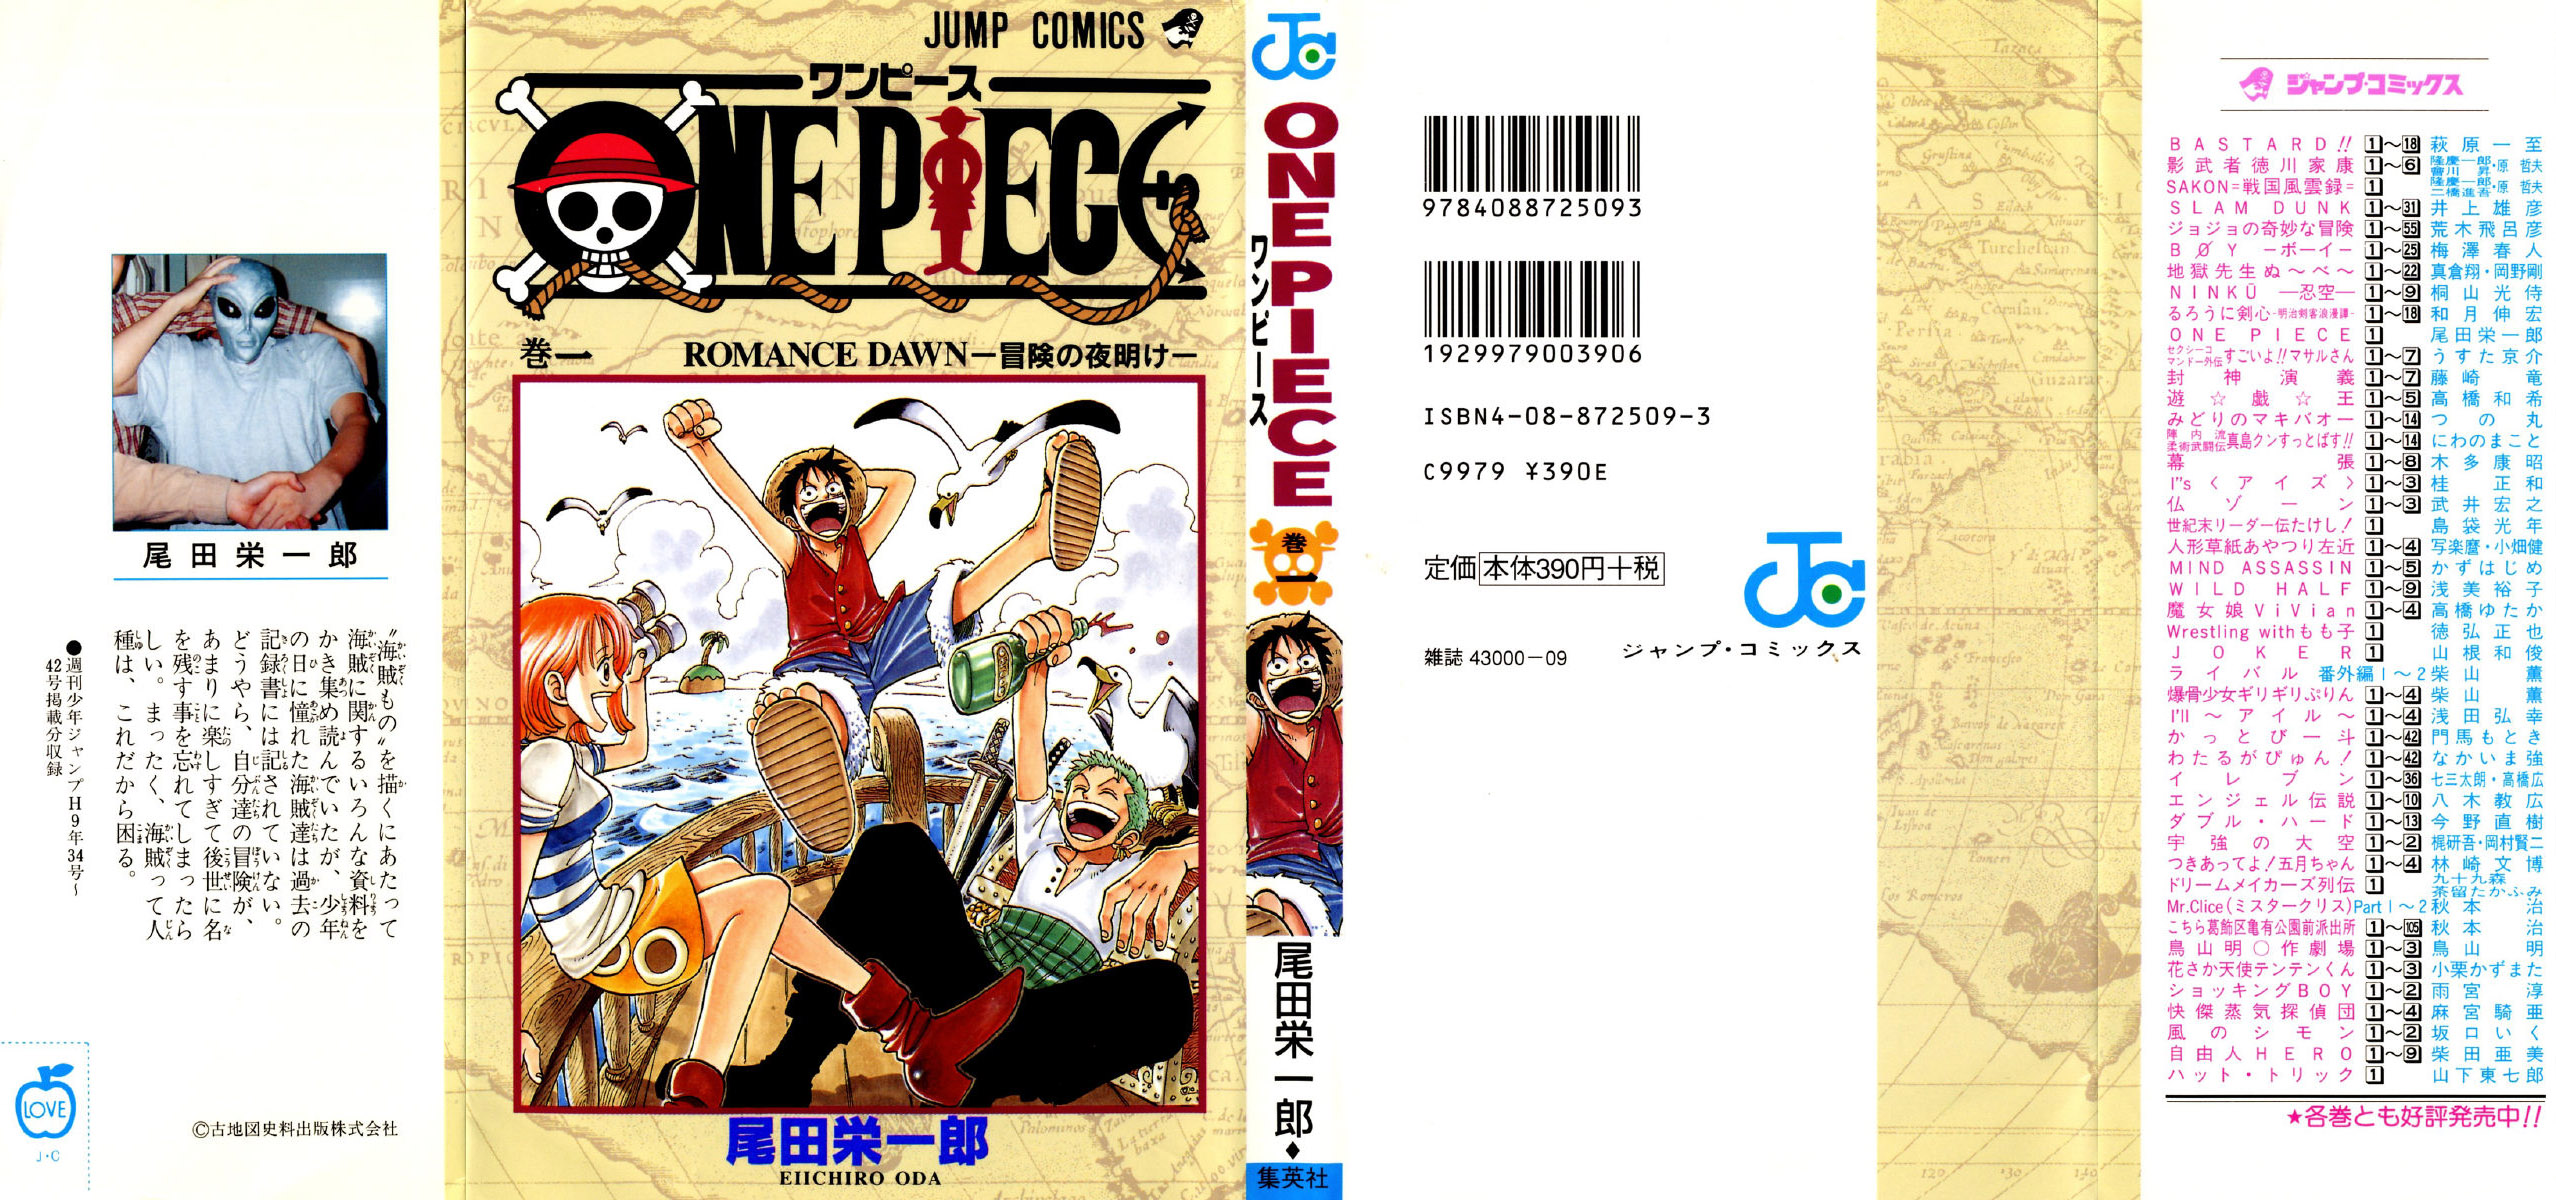 Notas do Autor, One Piece Wiki